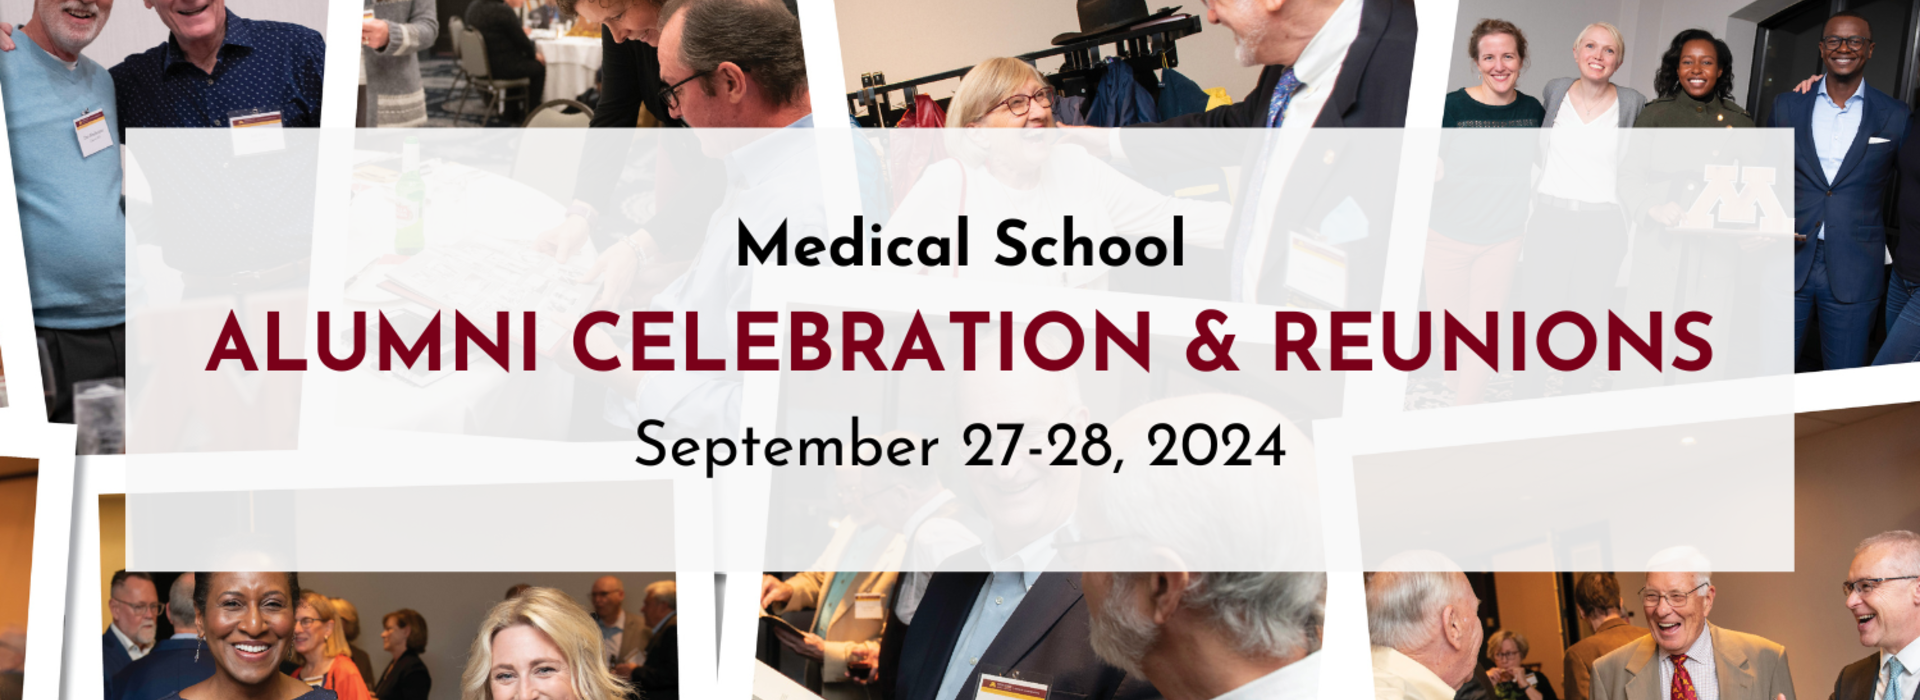 Medical School Alumni Celebration, September 27-28, 2024 banner